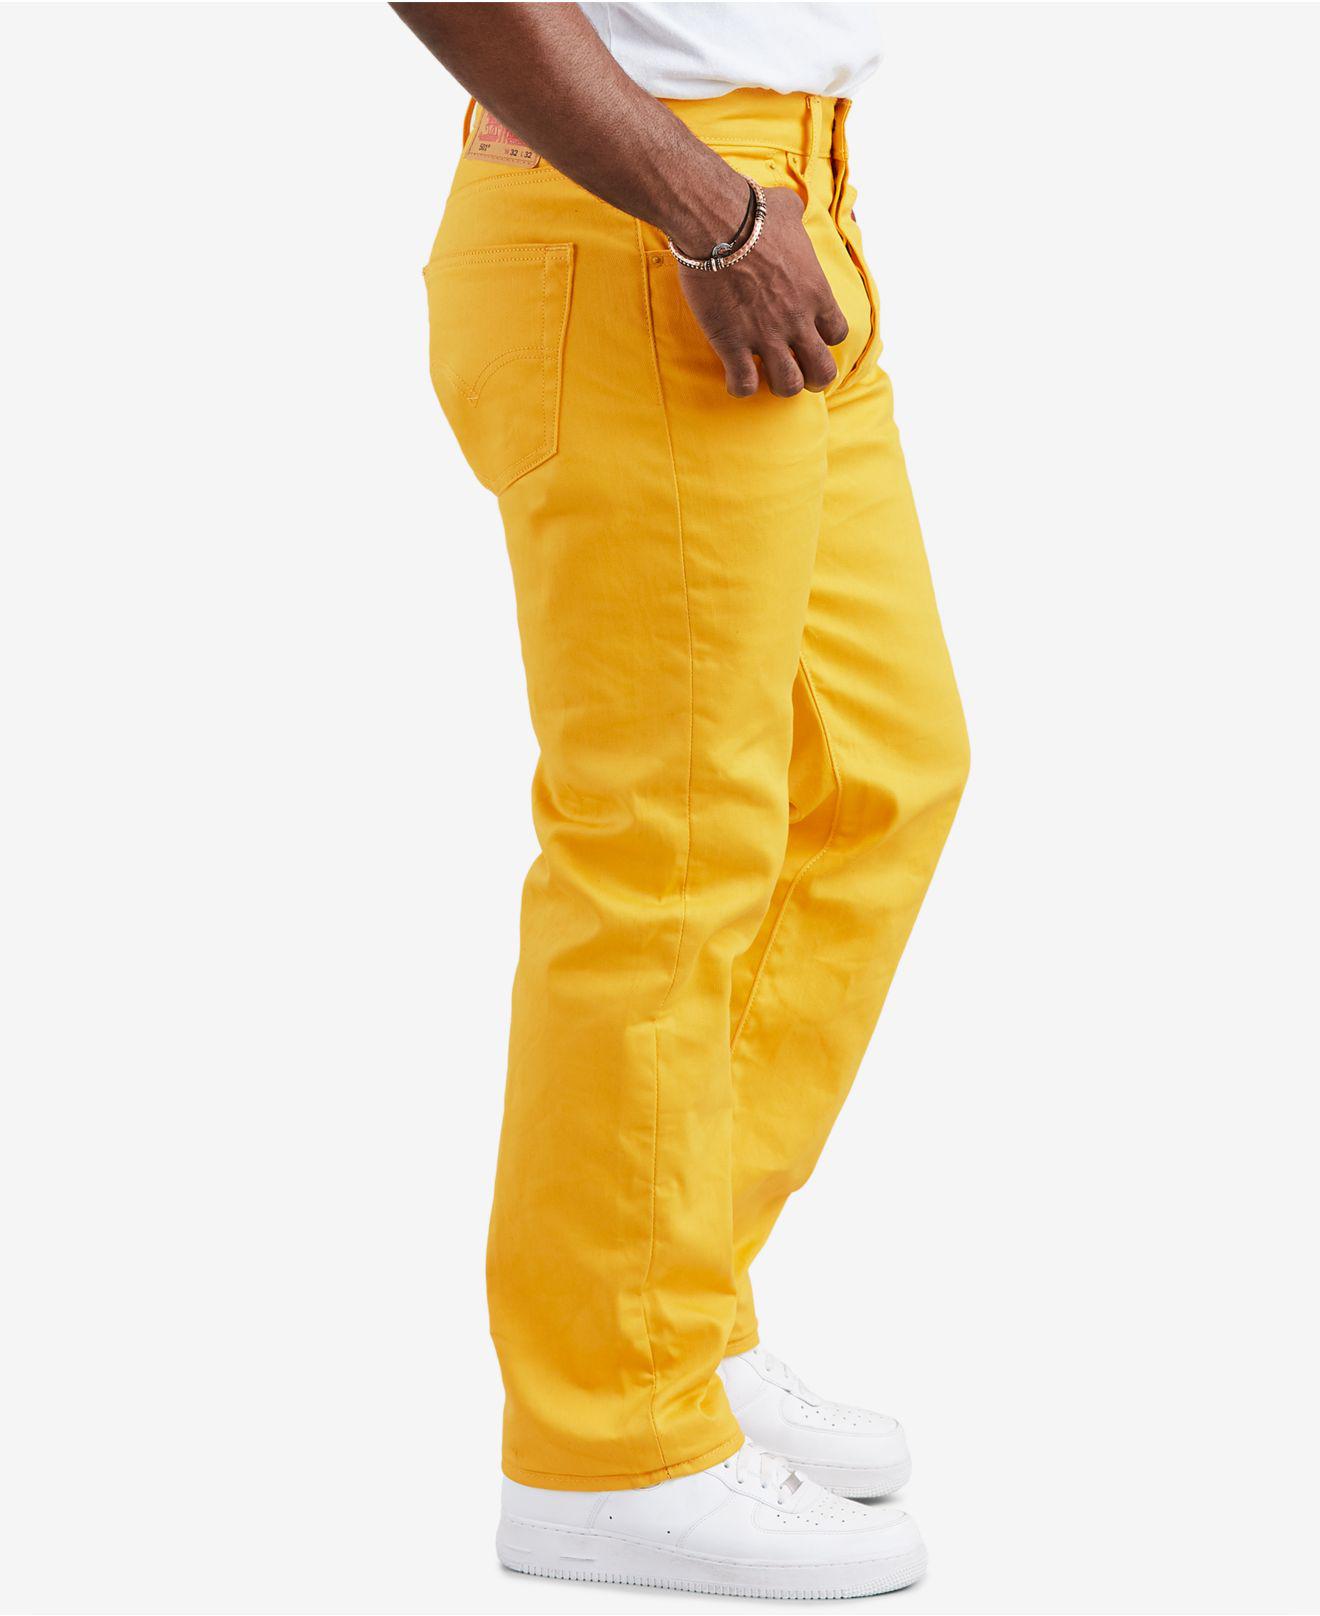 Levi's Denim 501 Original Fit Jeans in Yellow for Men - Lyst